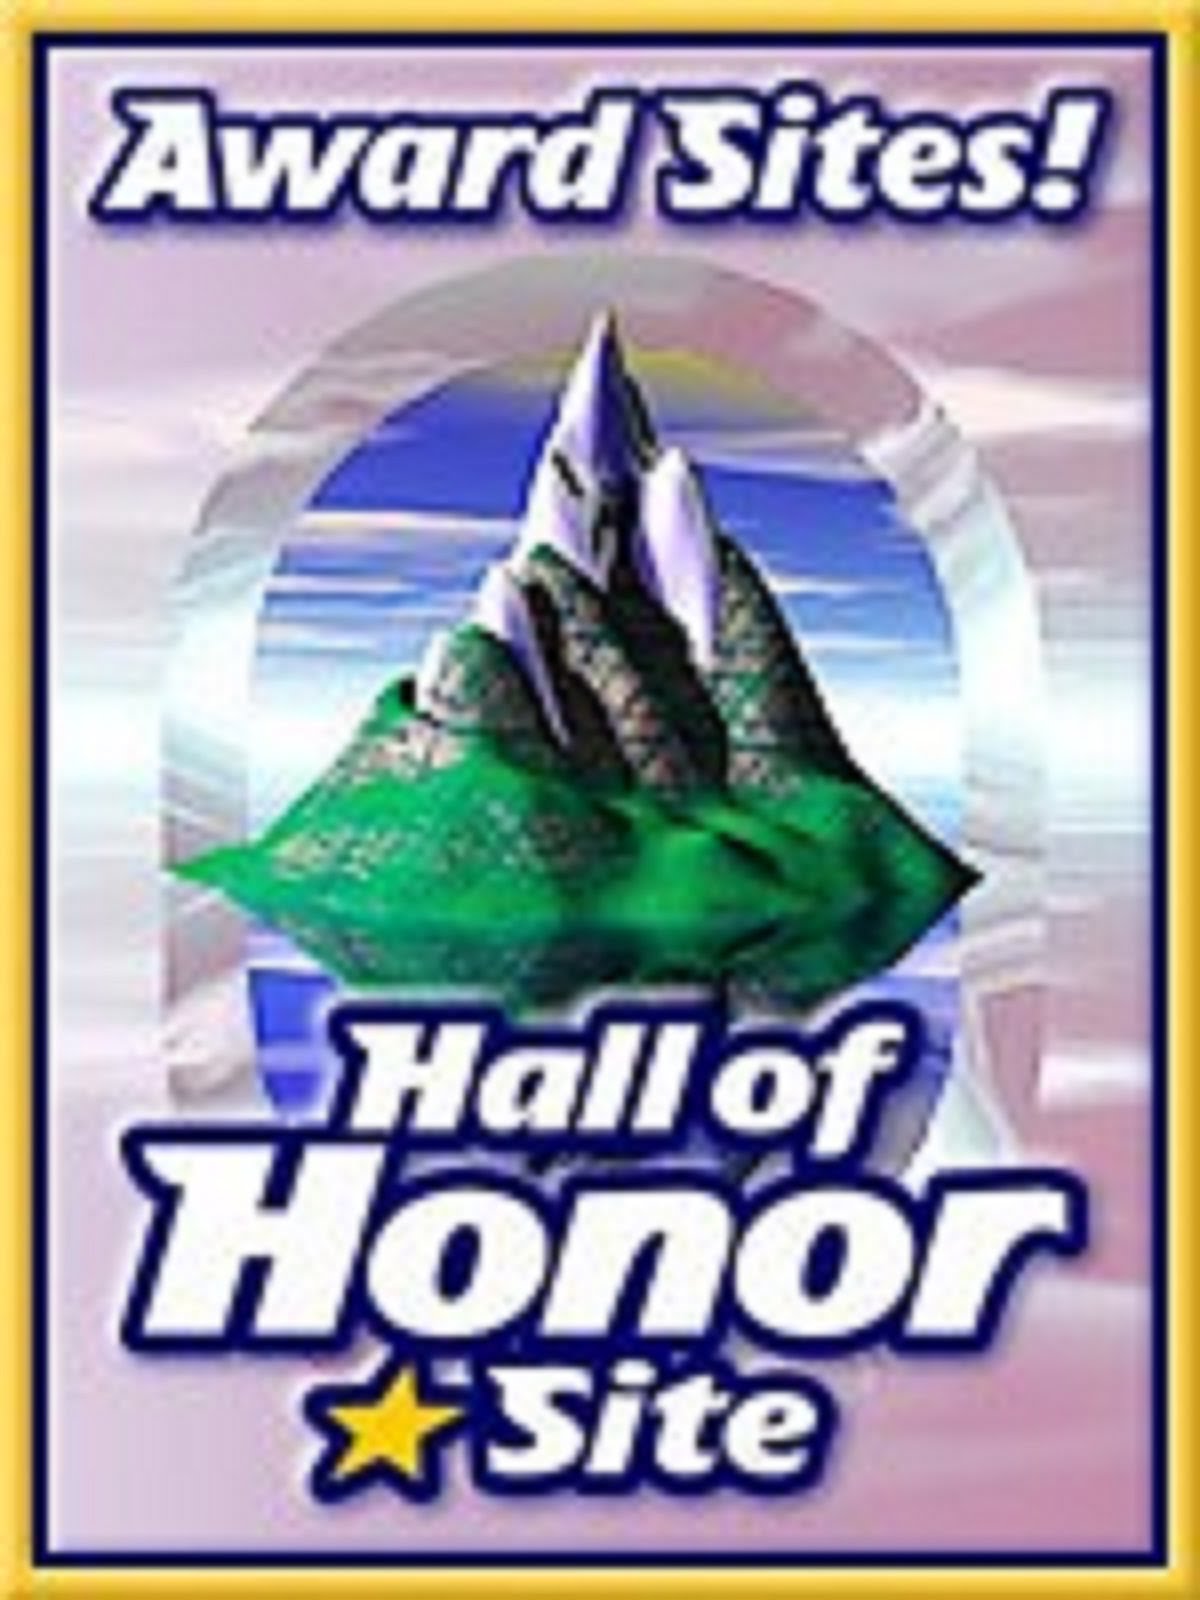 HALL OF HONOR - AWARD SITE BADGE